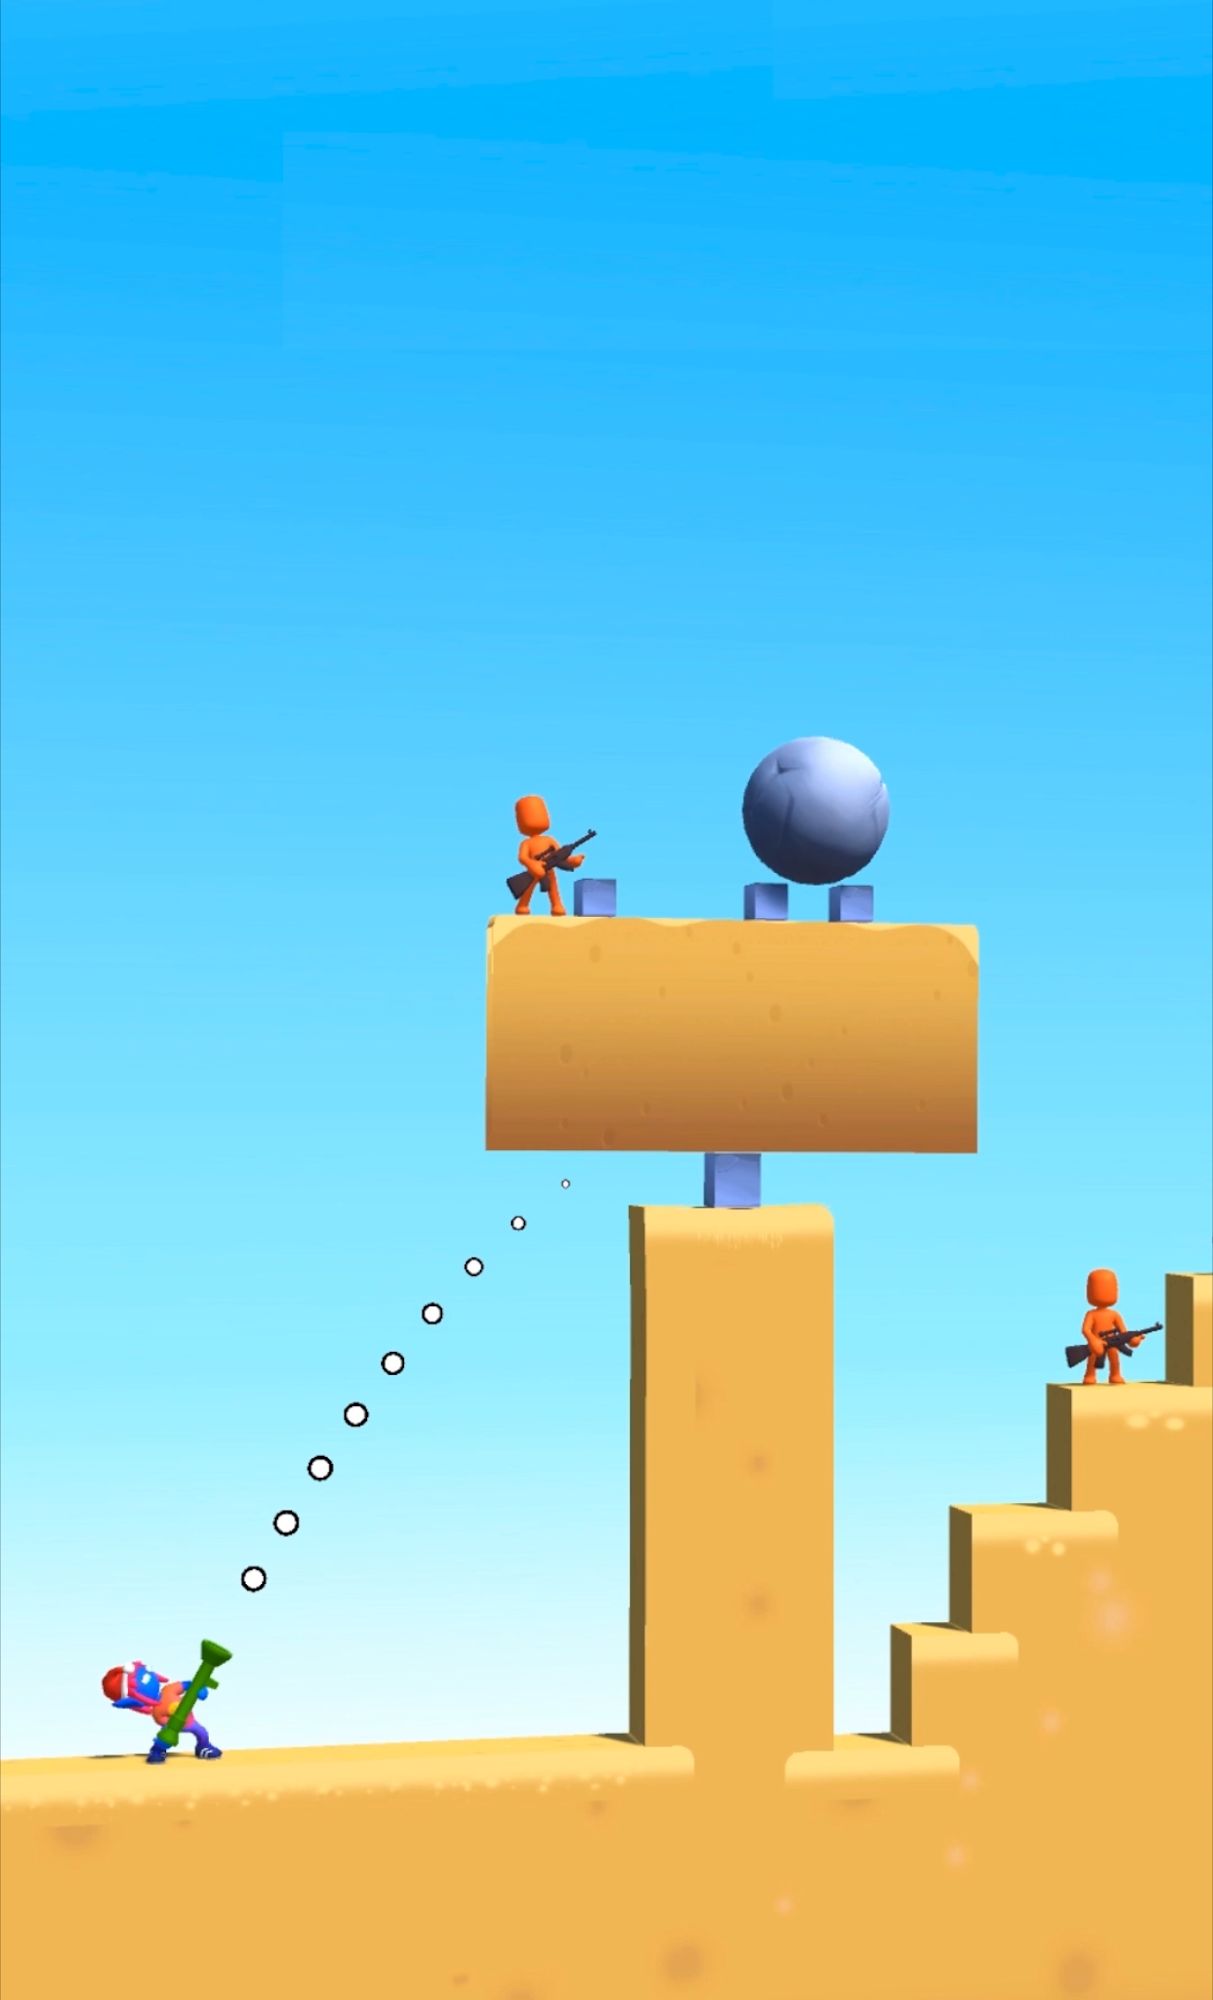 Bazooka Boy - Android game screenshots.